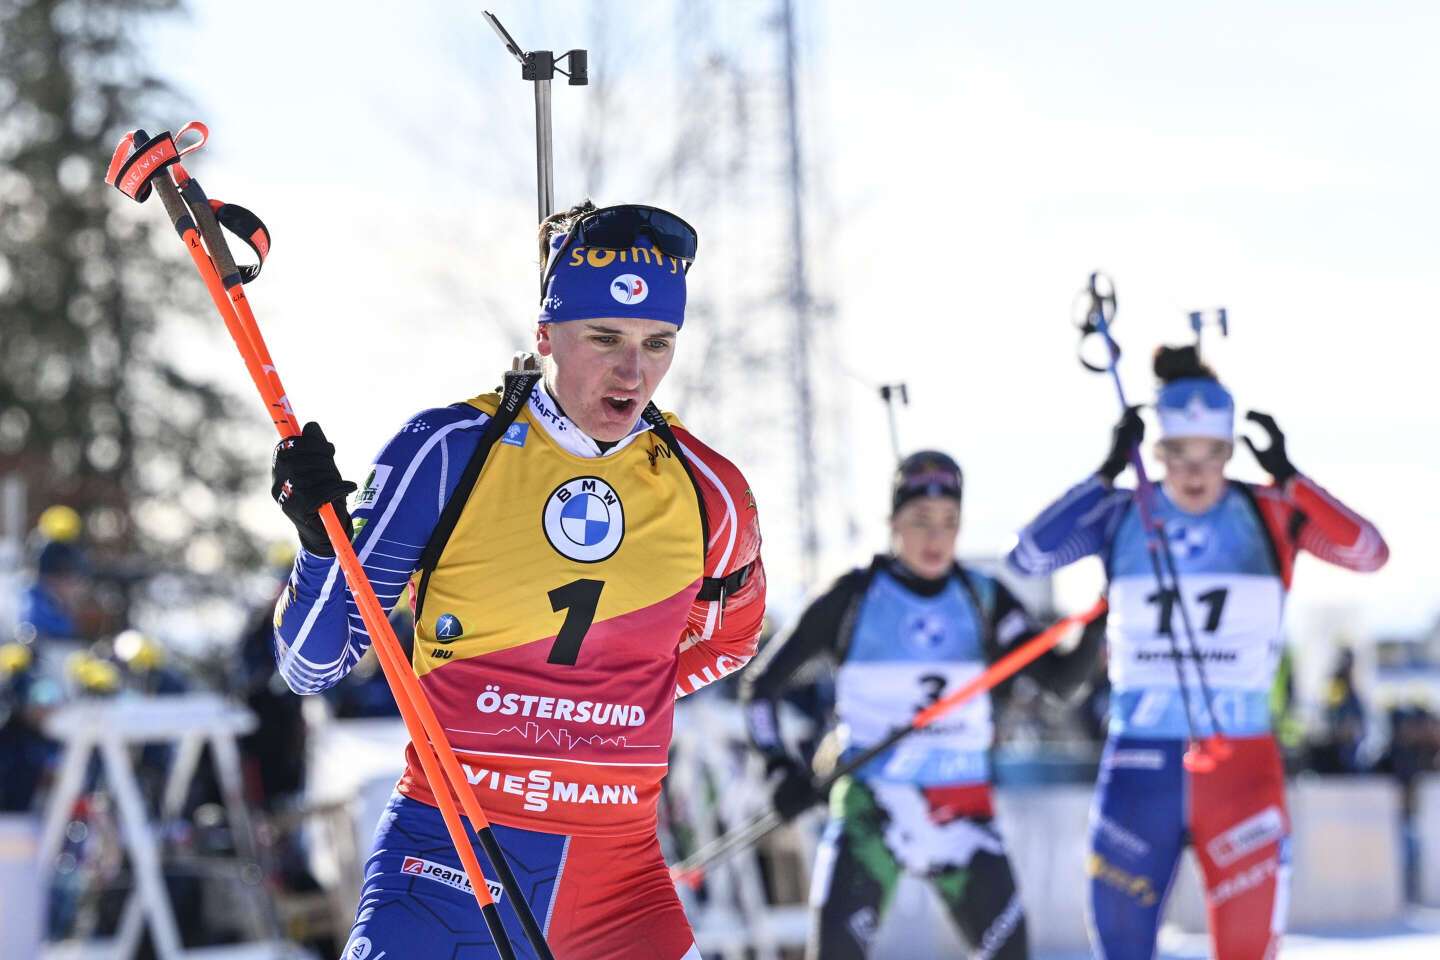 Julia Simon wins the Biathlon World Cup